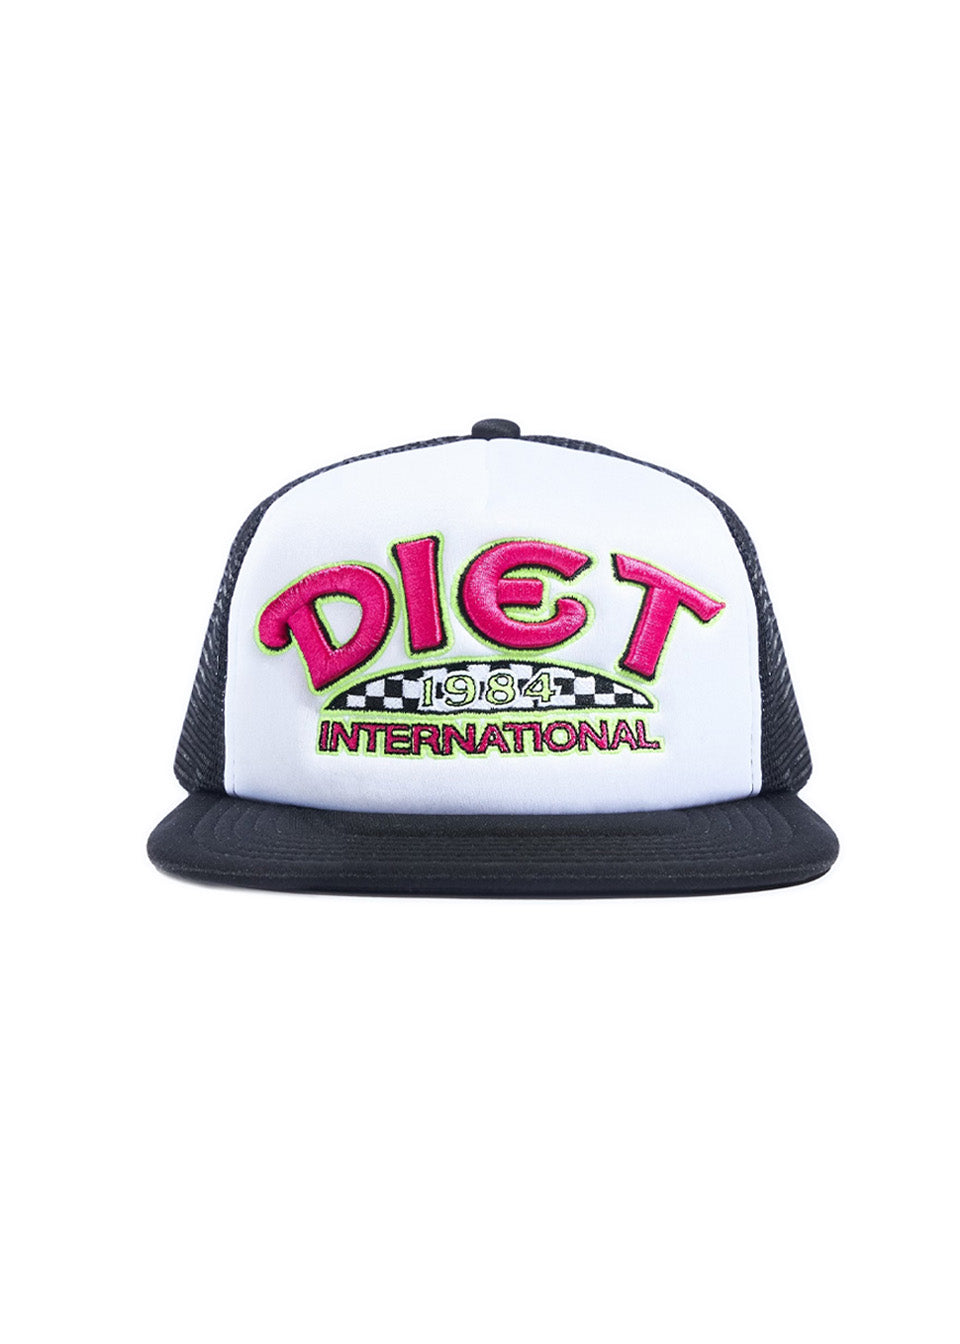 Diet INTL Trucker Hat - White/Black